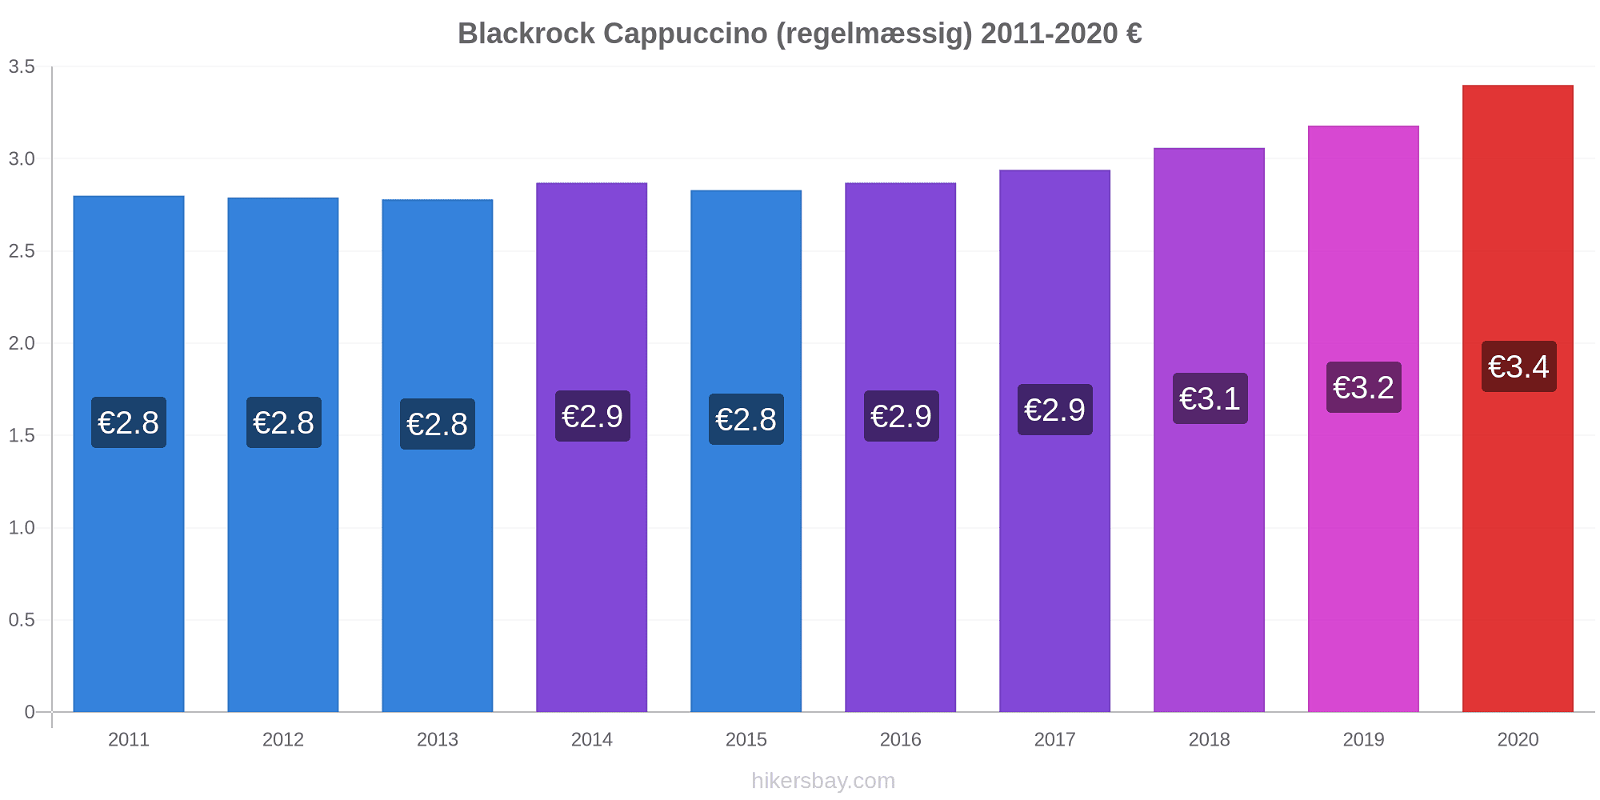 Blackrock prisændringer Cappuccino (regelmæssig) hikersbay.com